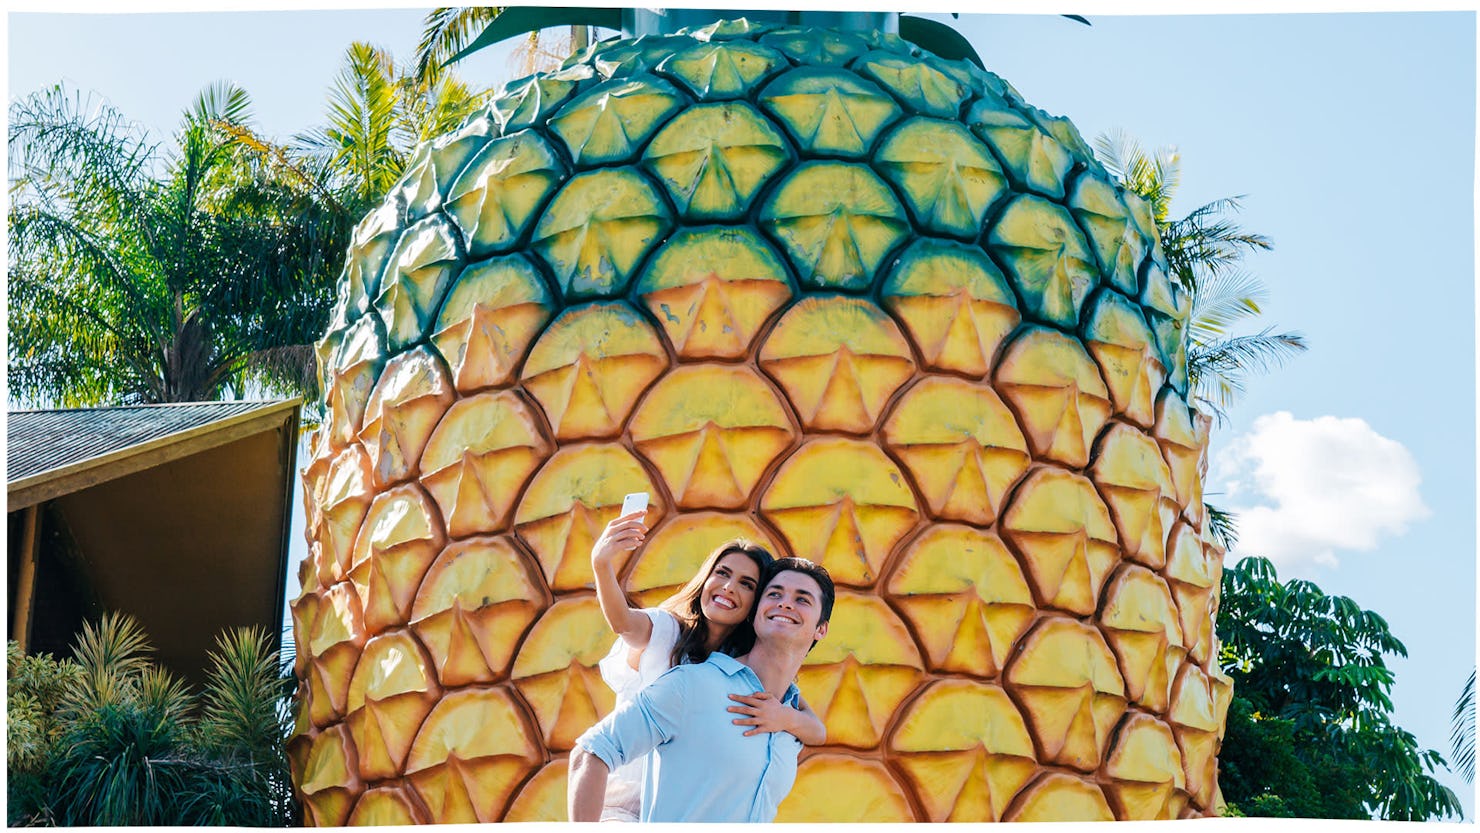 Selfies at the Big Pineapple, Woombye